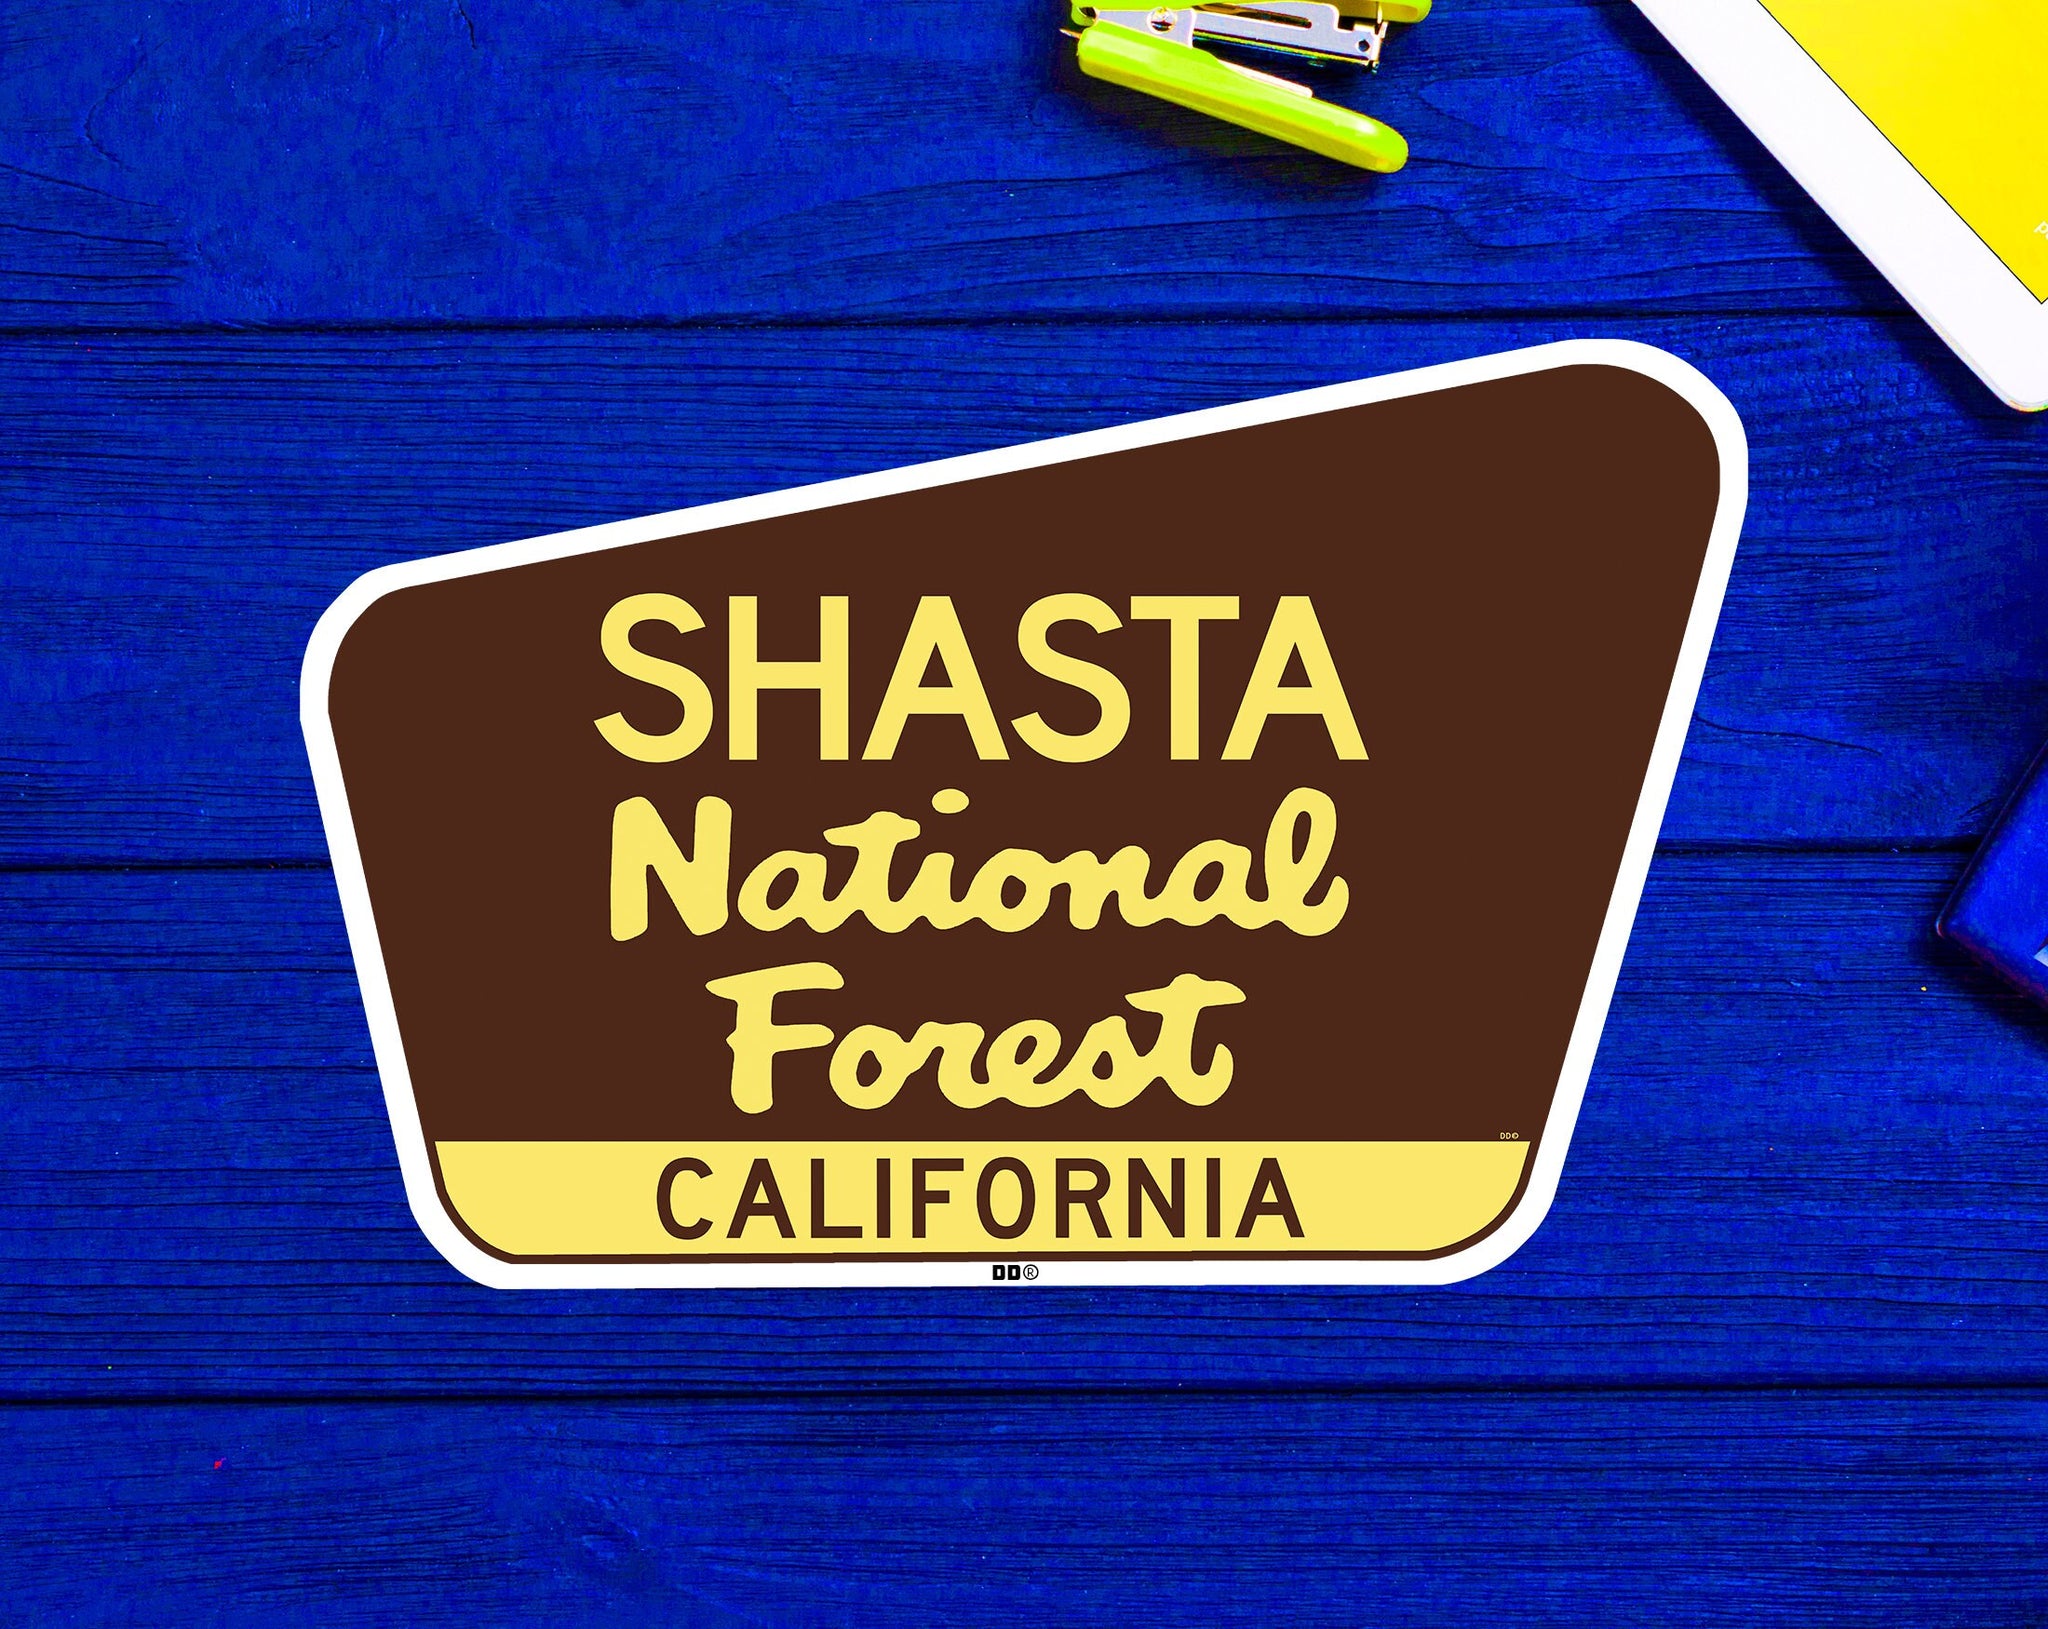 Shasta National Forest California Decal Sticker 3.75" x 2.5" Vinyl